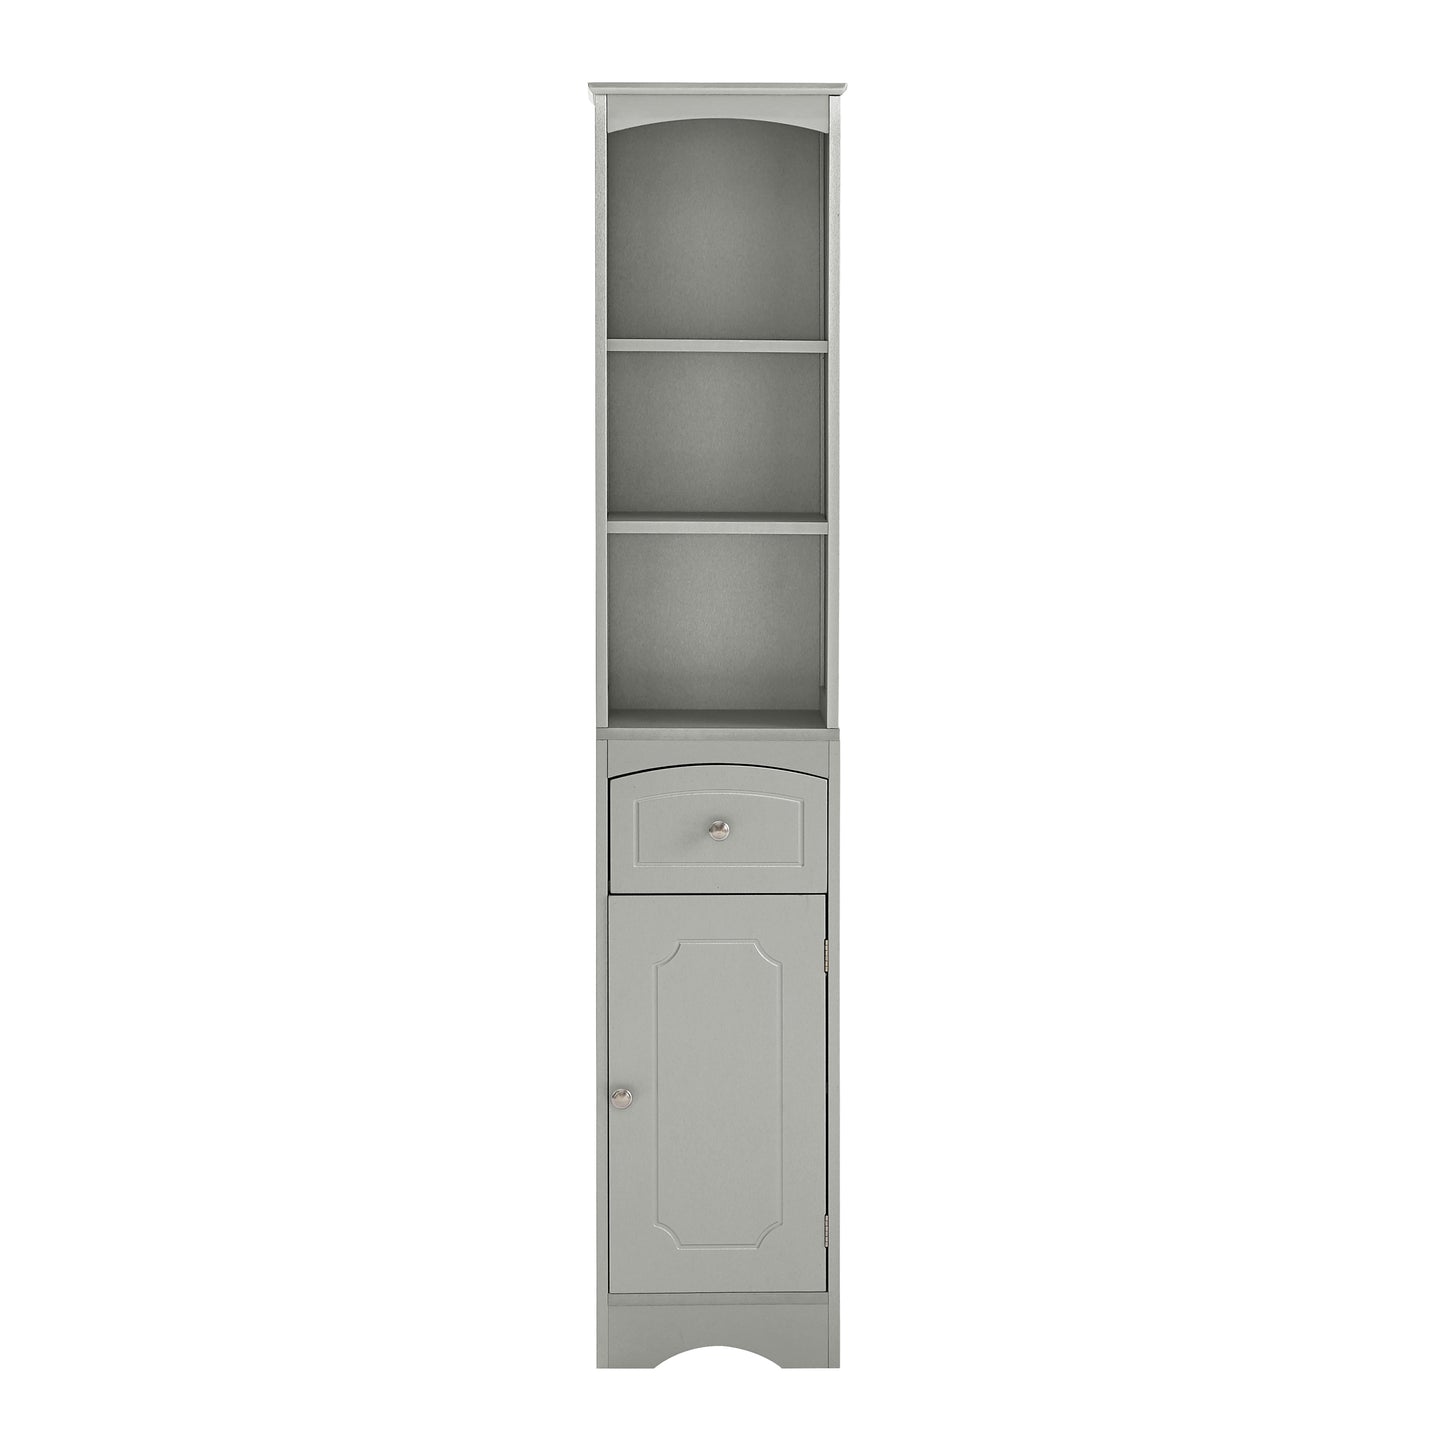 Tall Bathroom Cabinet, Freestanding Storage Cabinet with Drawer, MDF Board, Adjustable Shelf, Grey